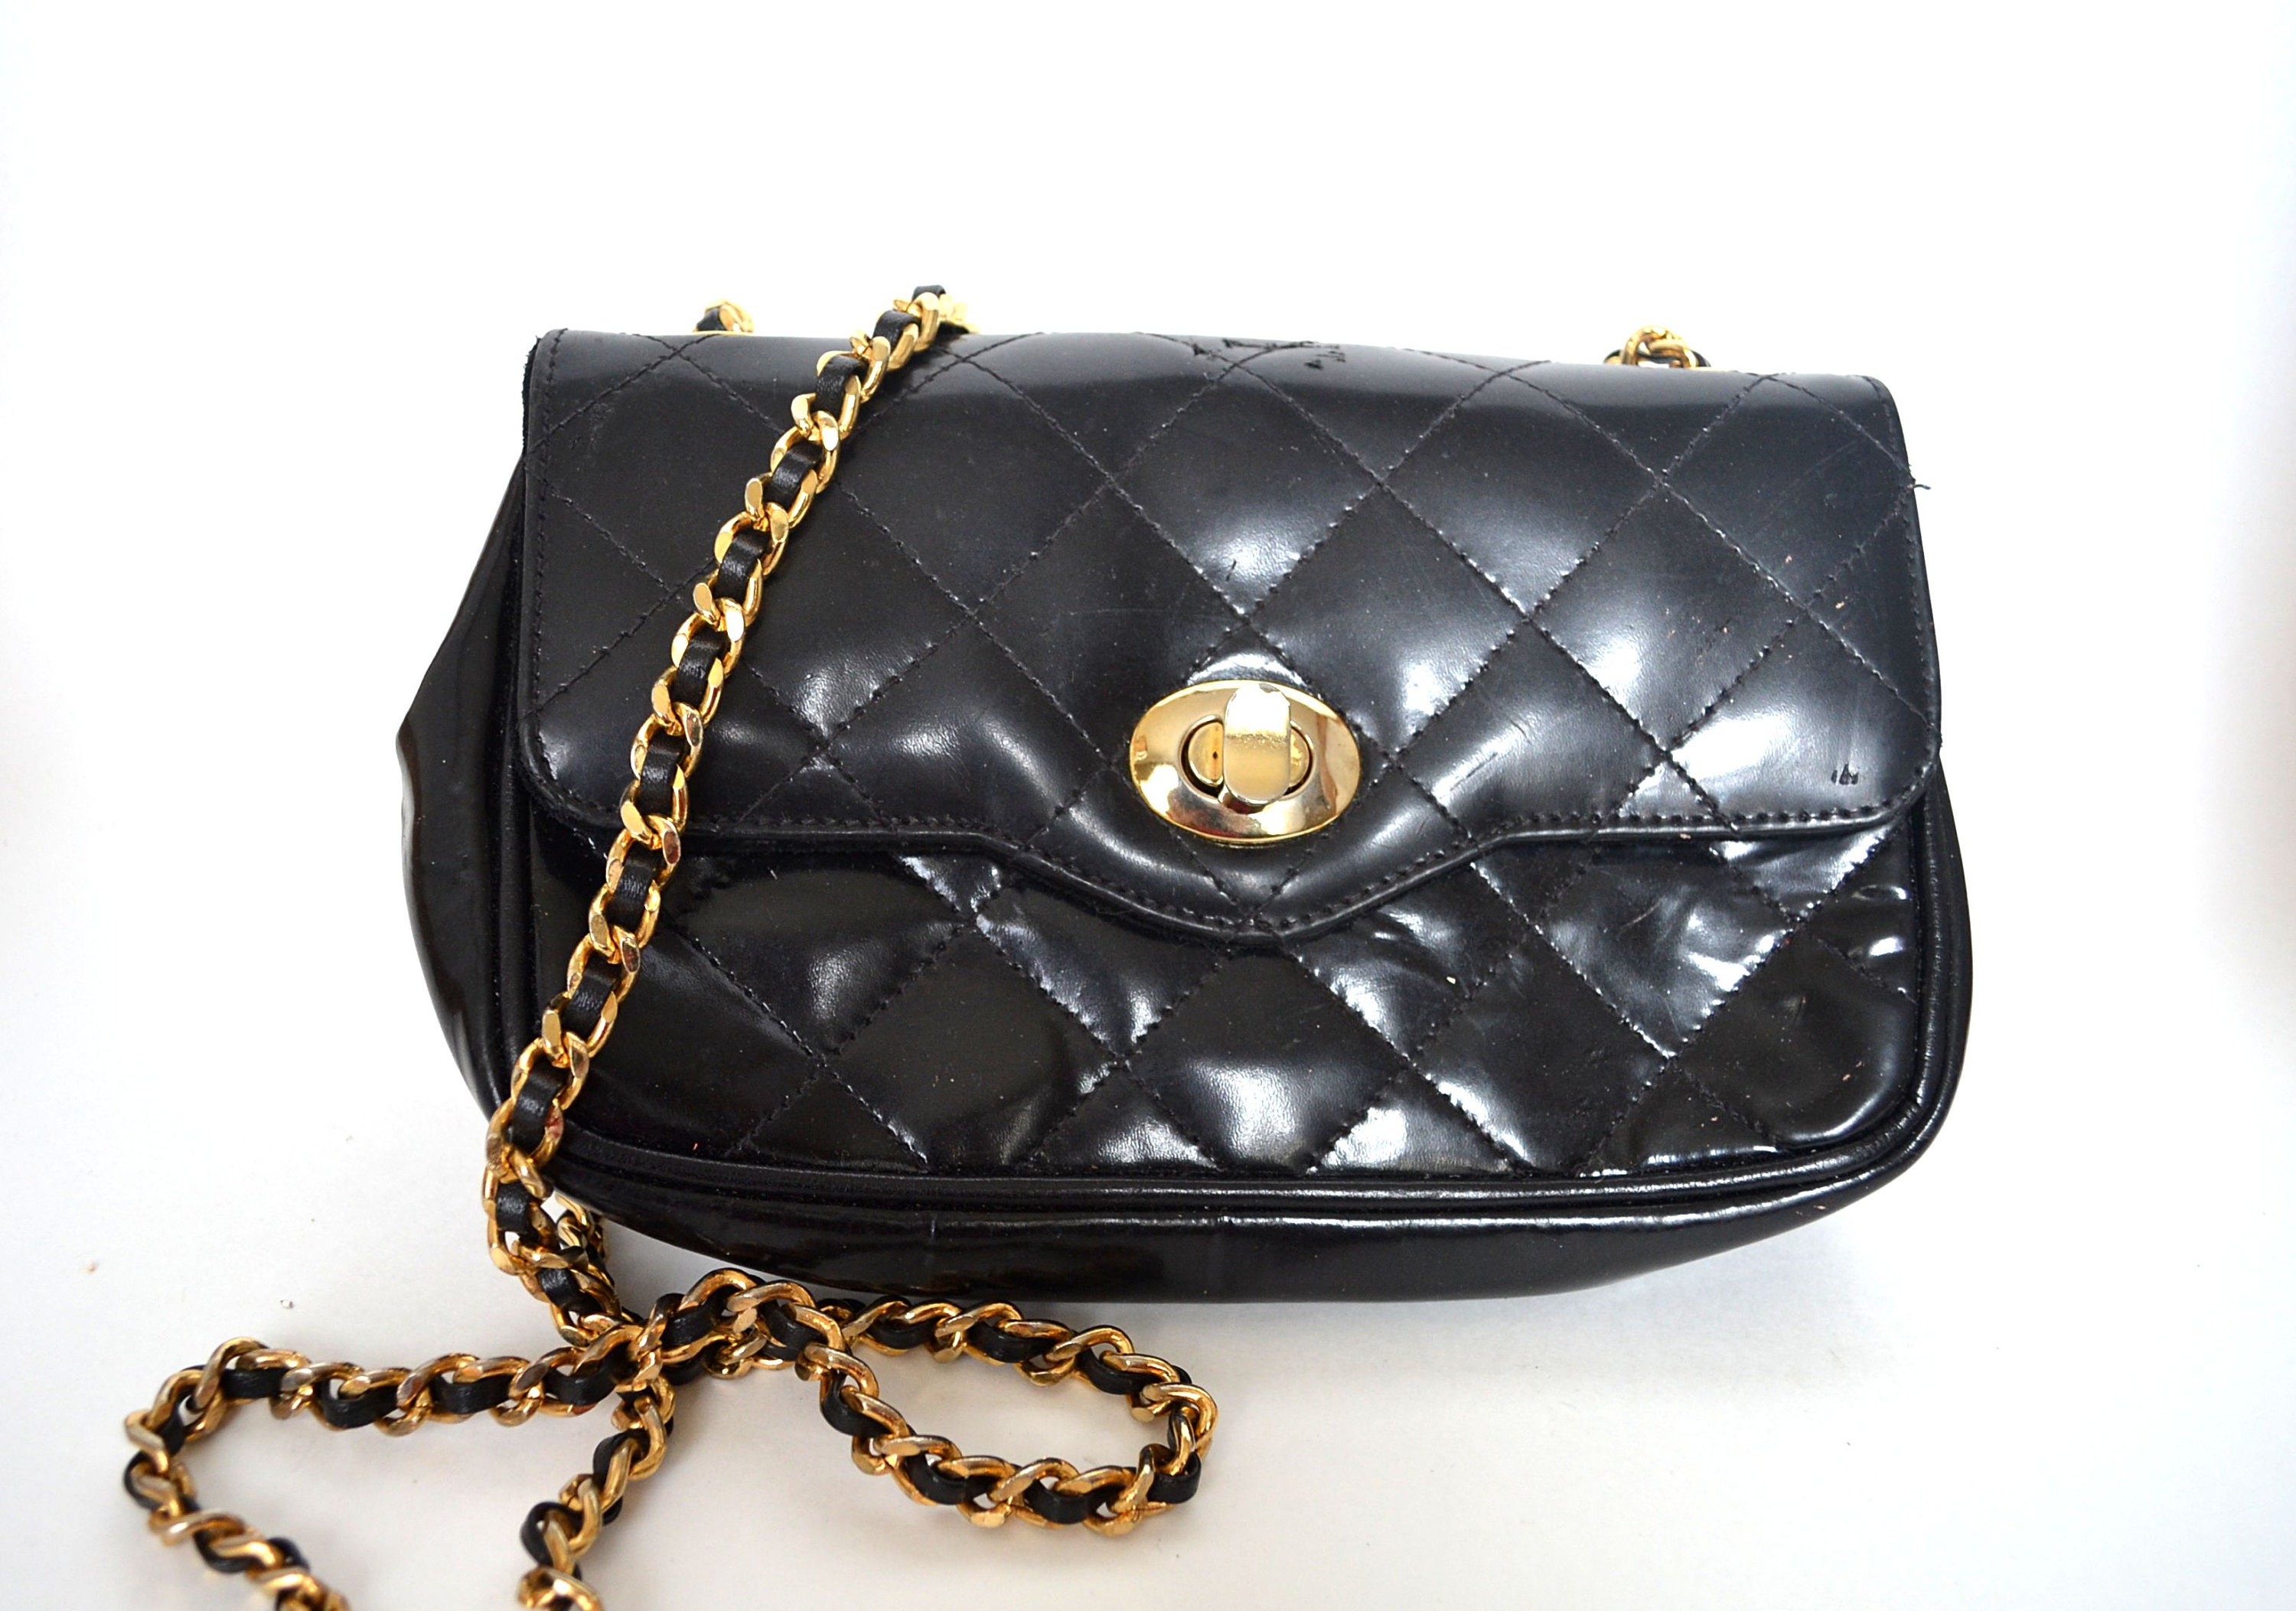 chanel black leather crossbody purse